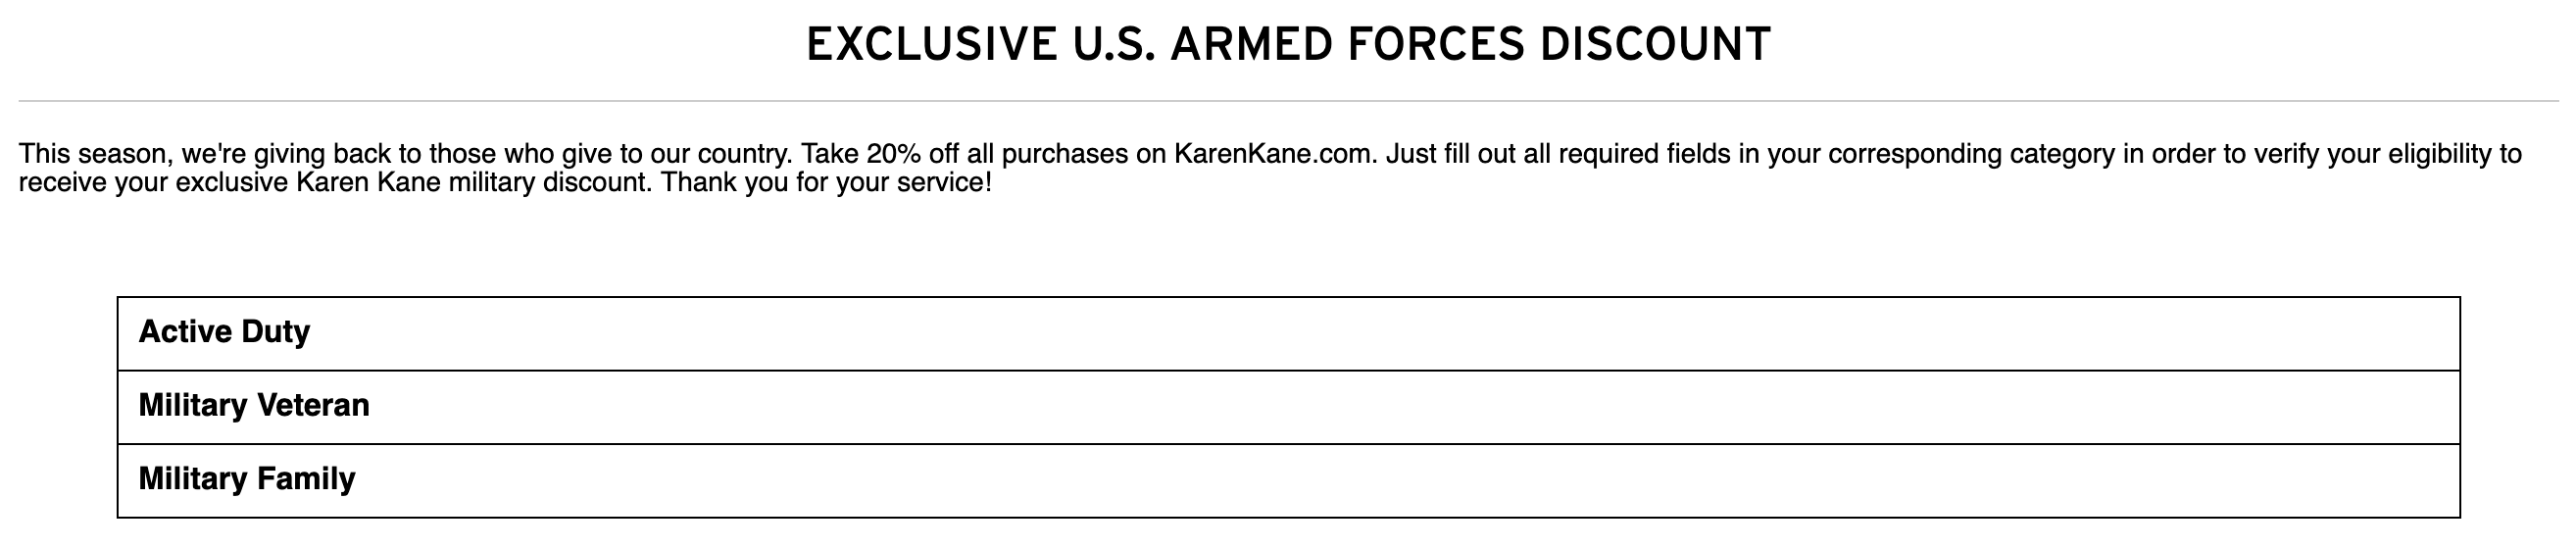 Karen Kane Military Veteran Discounts